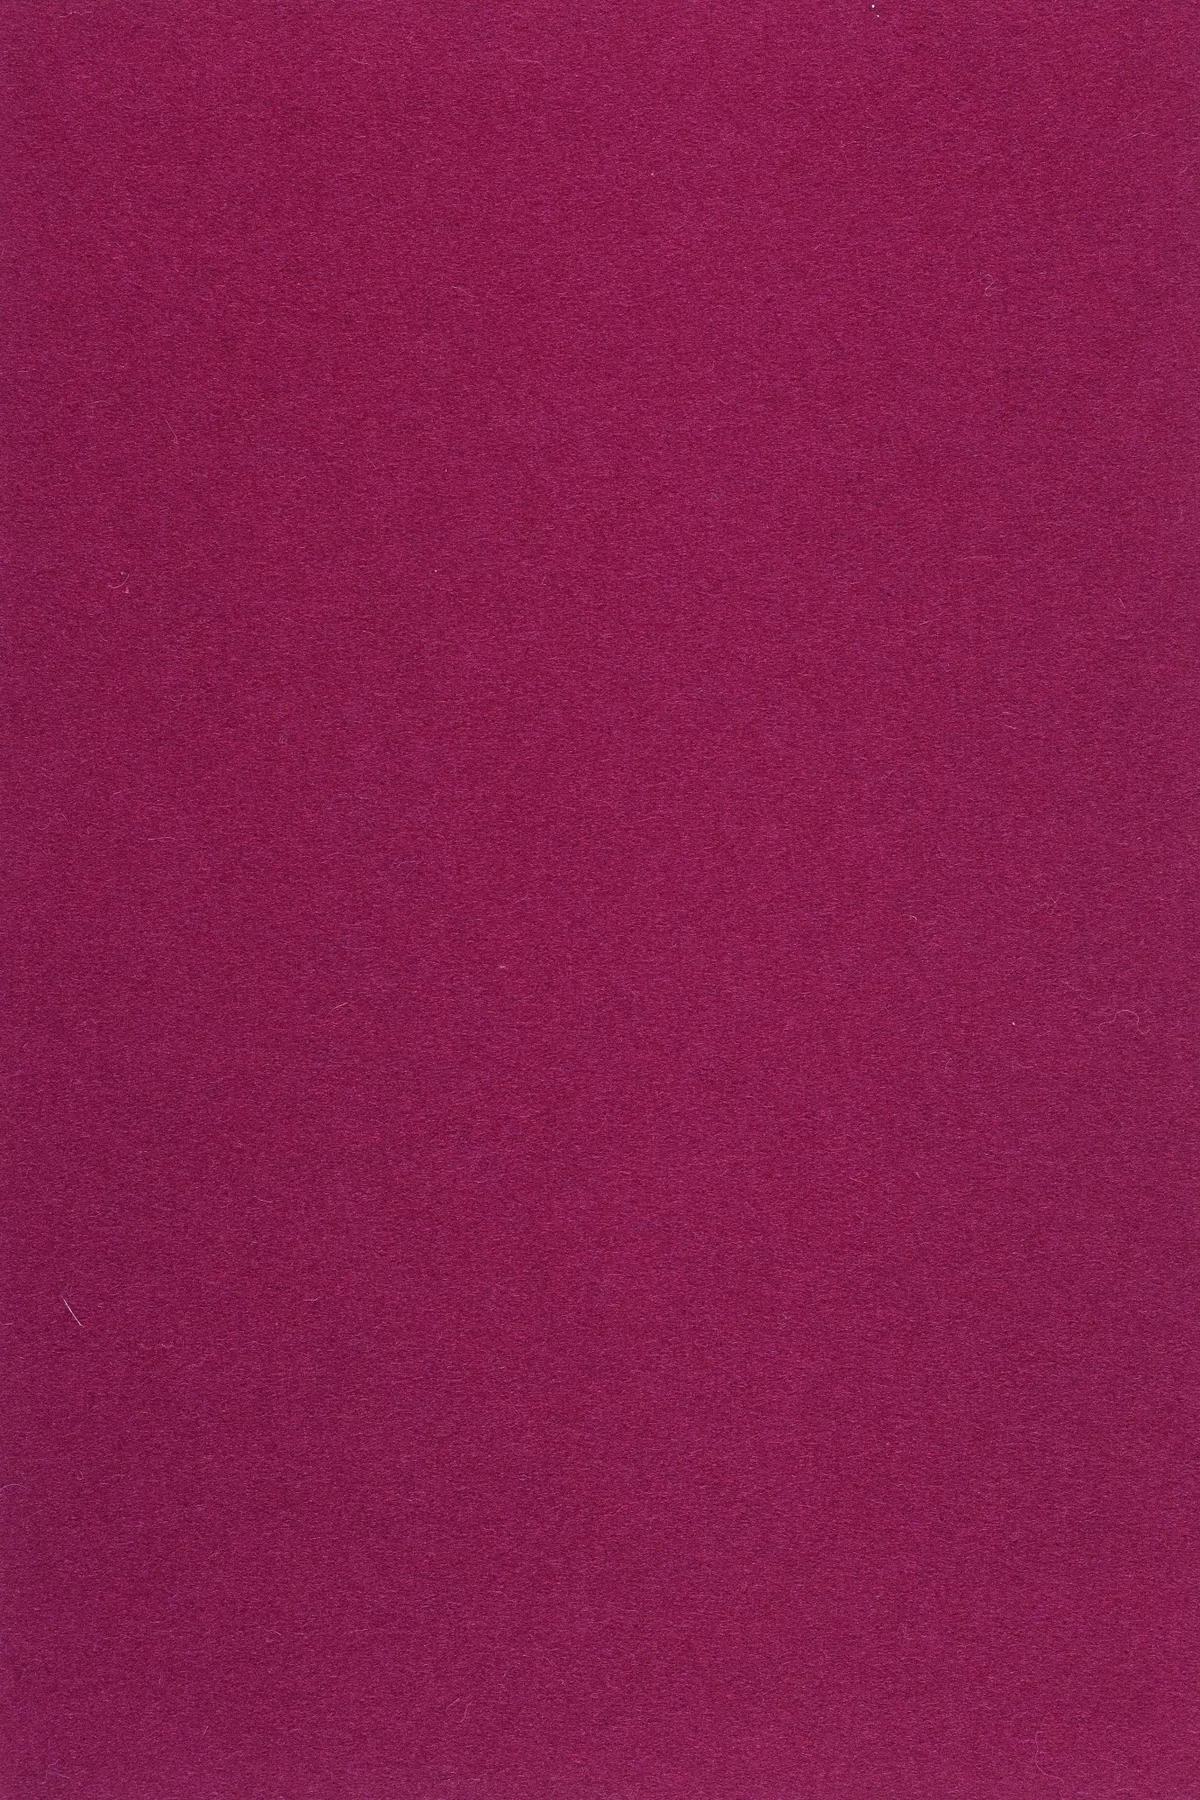 Fabric sample Divina 3 652 purple